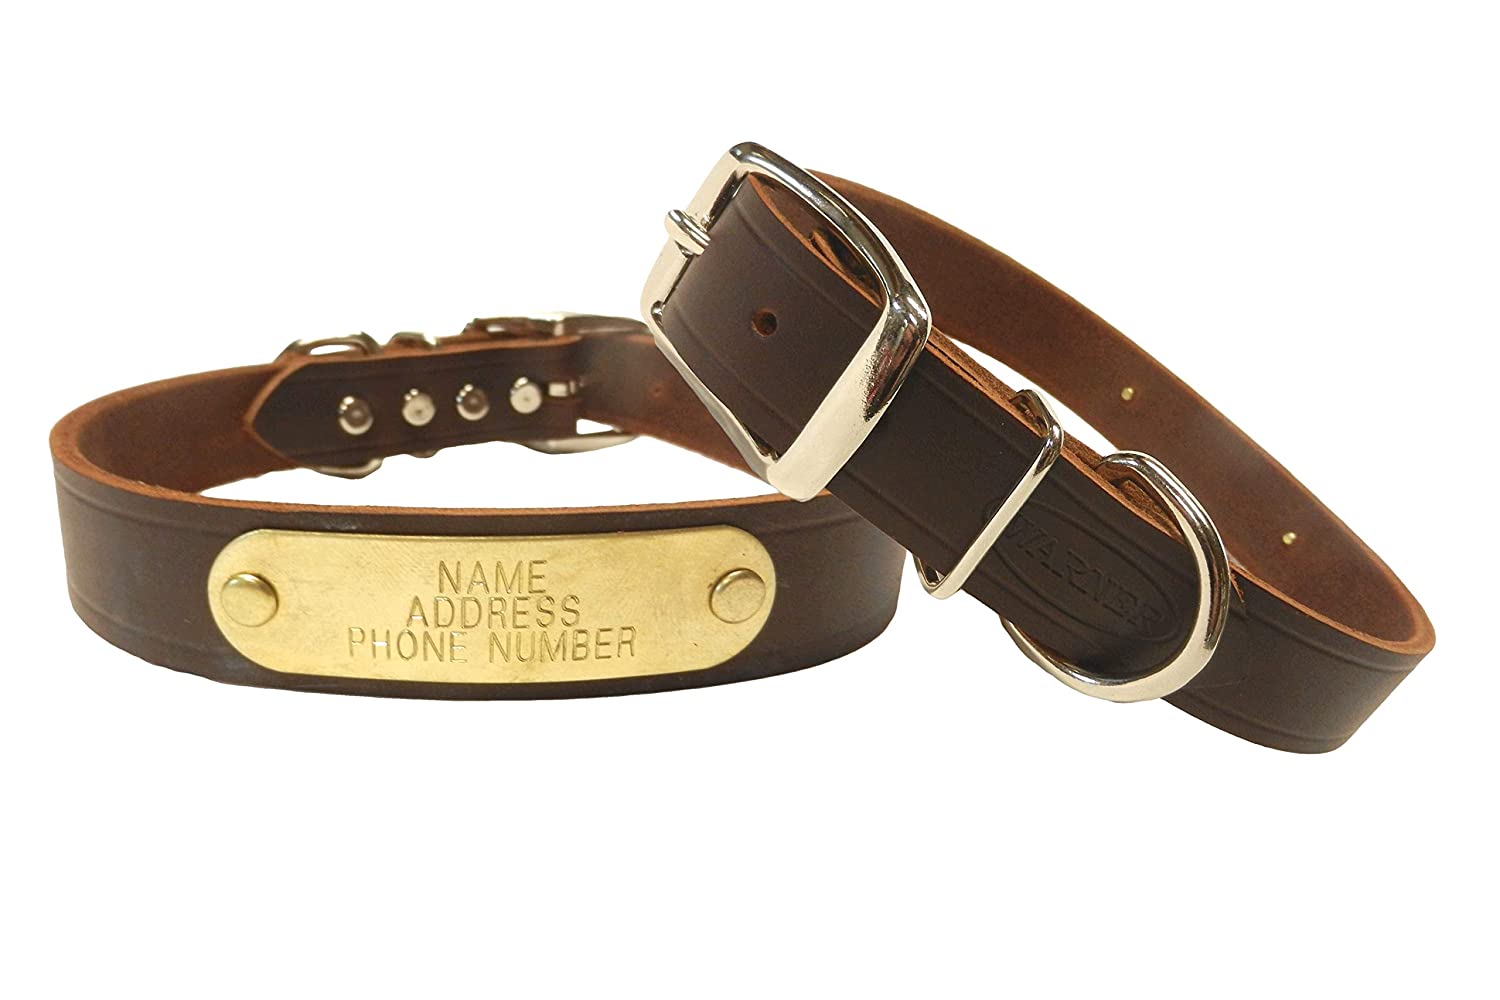 Warner Cumberland Leather Dog Collar